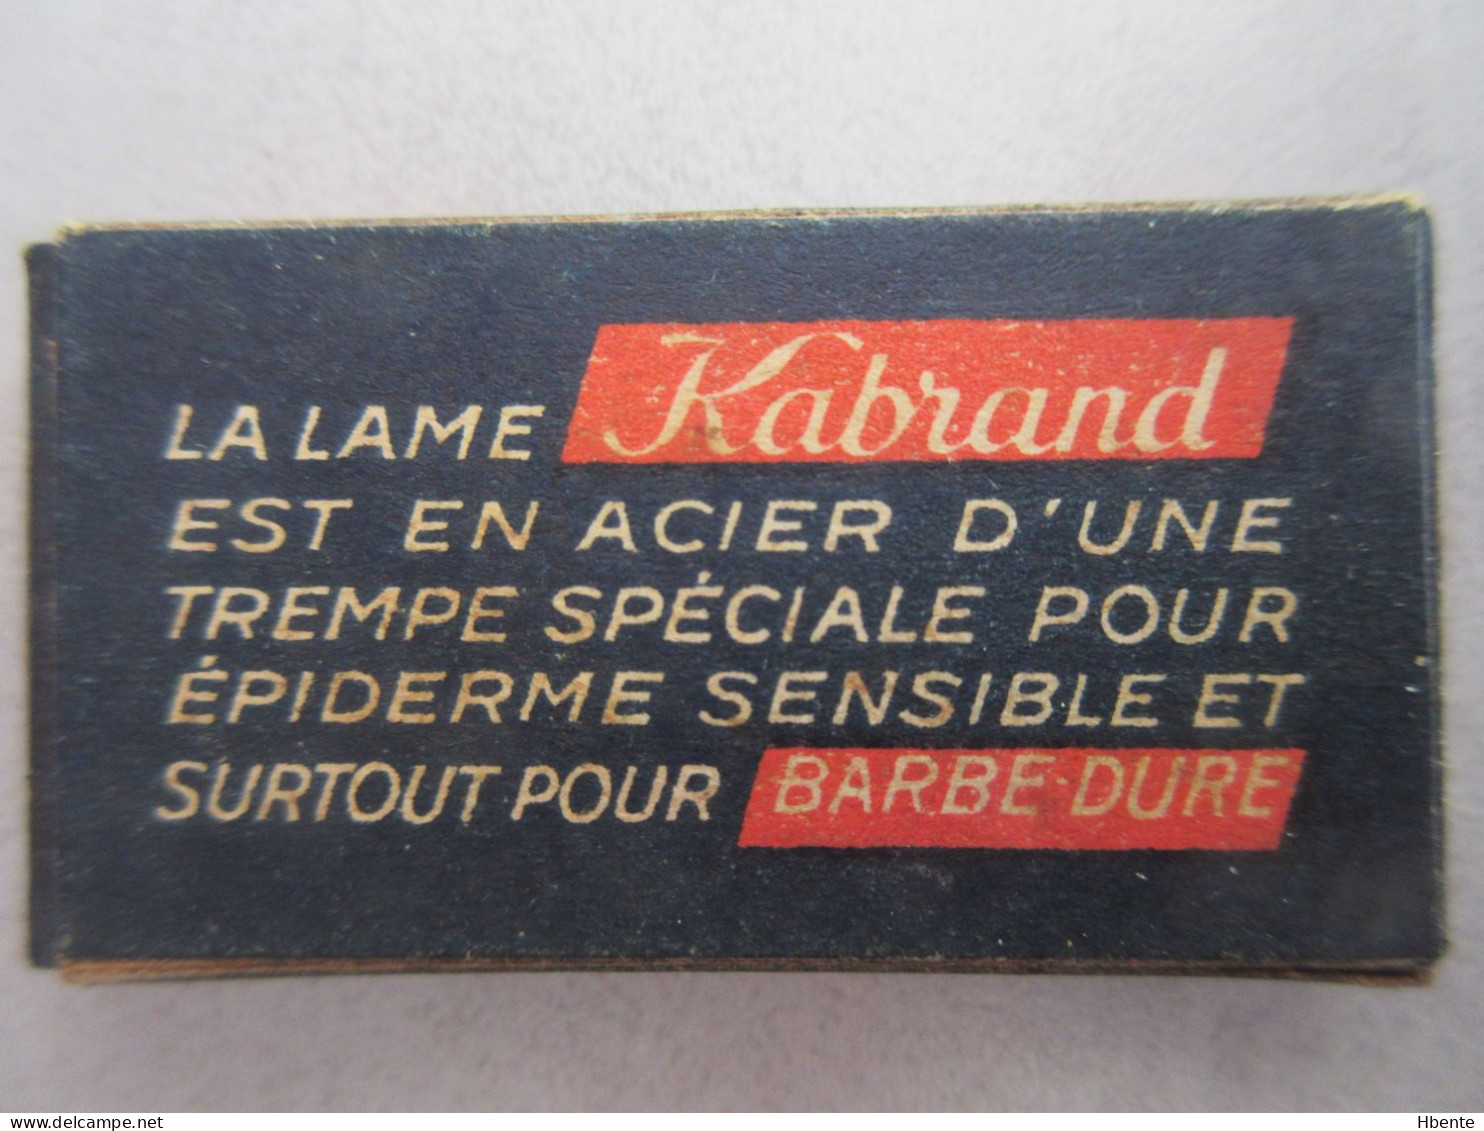 Boite Complète De 5 Lames De Rasoir KABRAND - Complet Box Of 5 Rasor Blades - Rasierklingen